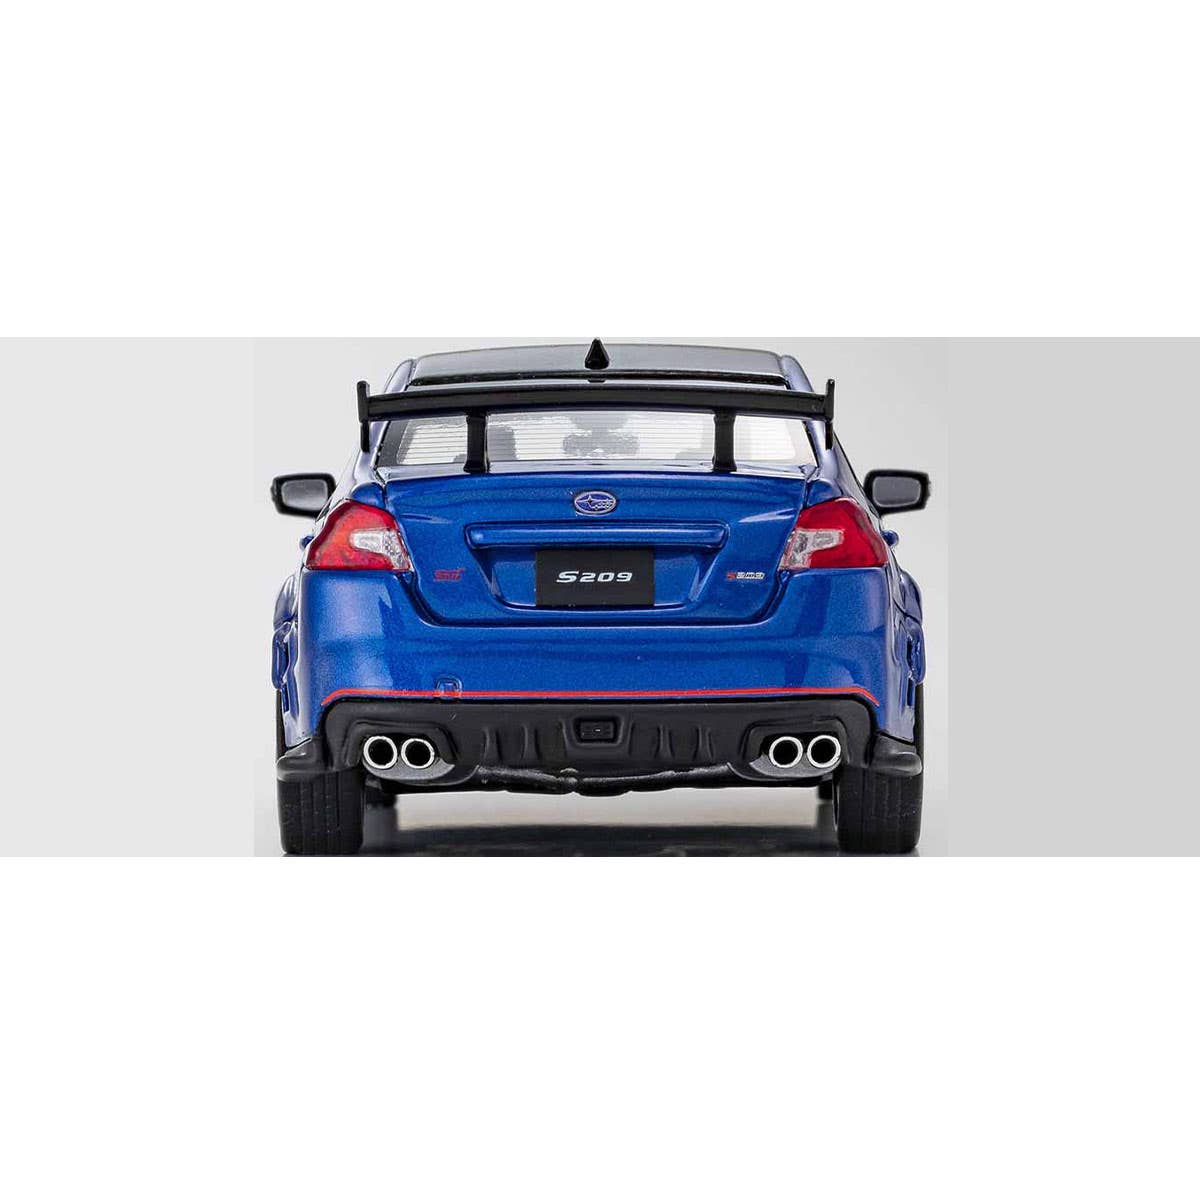 Subaru S209  (Blue) - Limited 600pcs - 1:43 Scale Resin Model Car